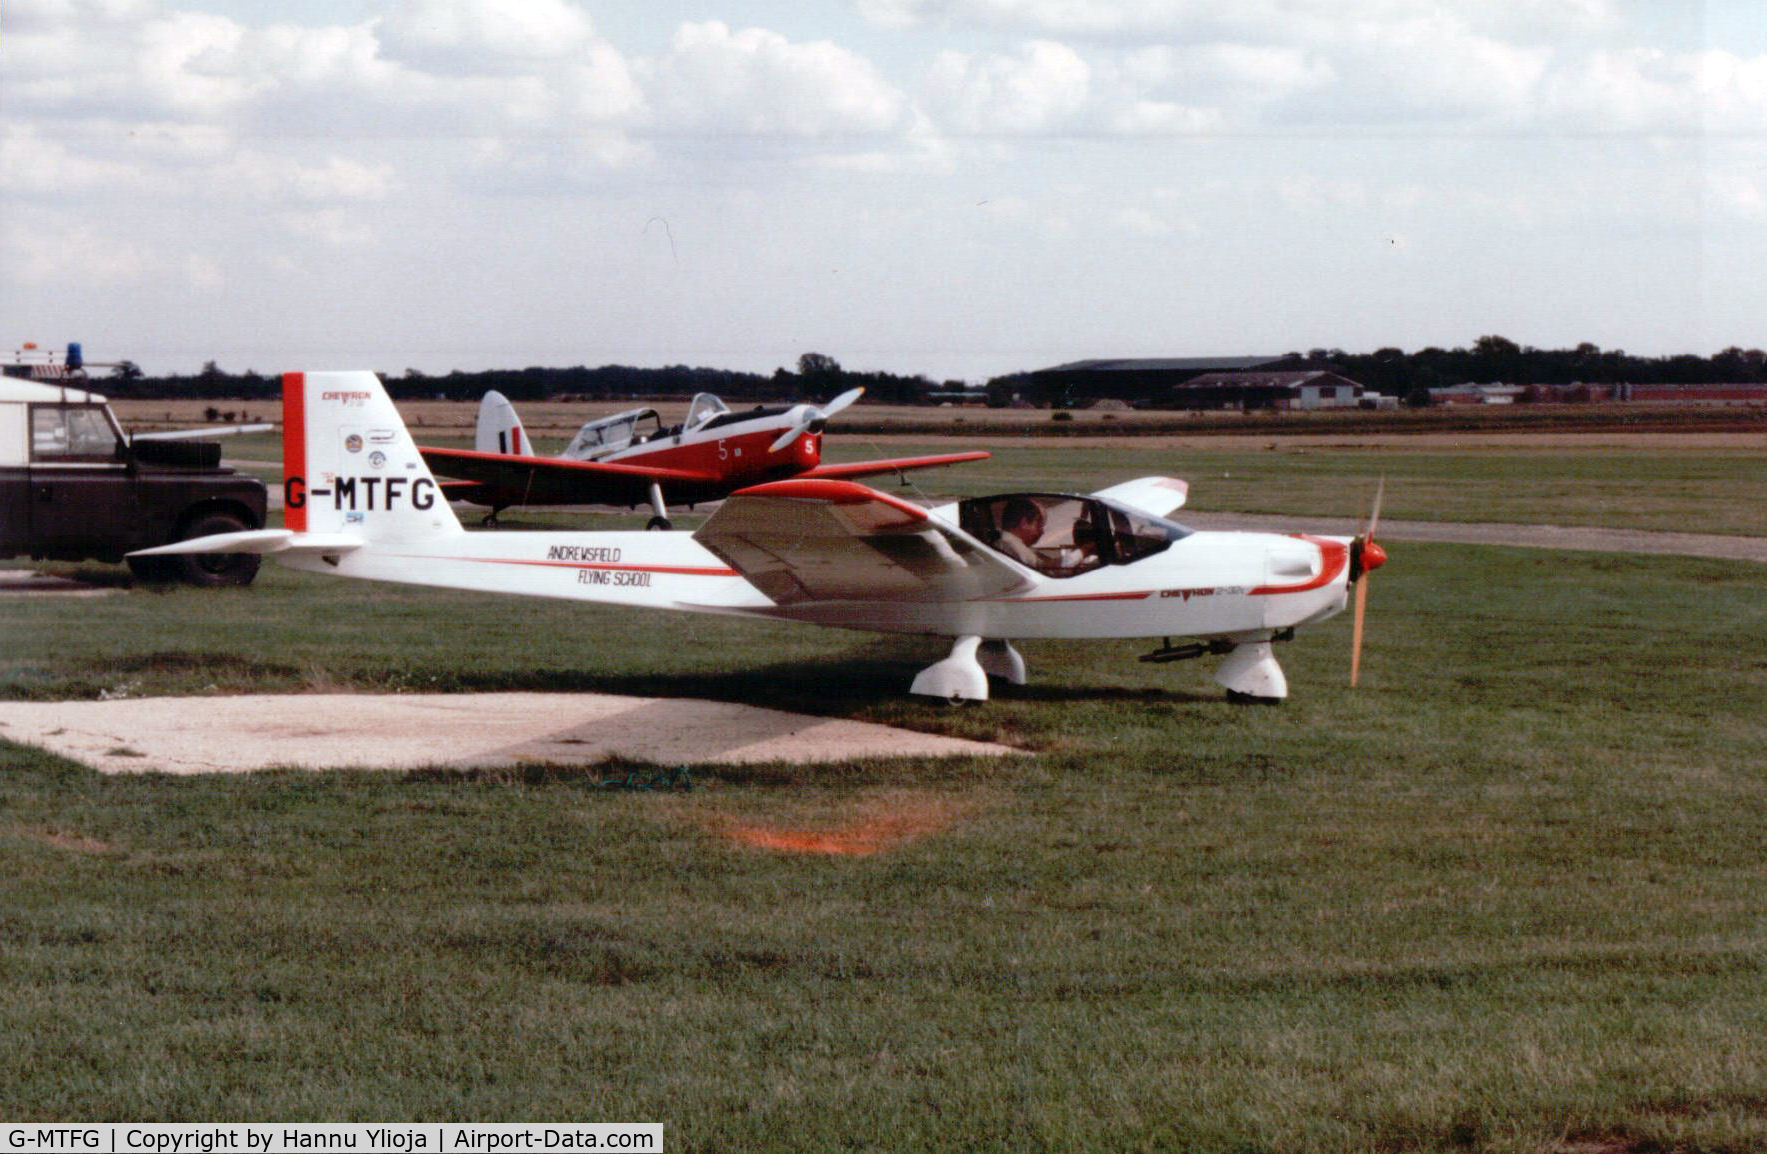 G-MTFG, 1987 AMF Chevvron 2-32 C/N 004, Andrewsfield Flying School
Taken at  EGSL Andrewsfield Aerodrome
 Saling Airfield Stebbing Great Dunmow Essex CM6 3TH